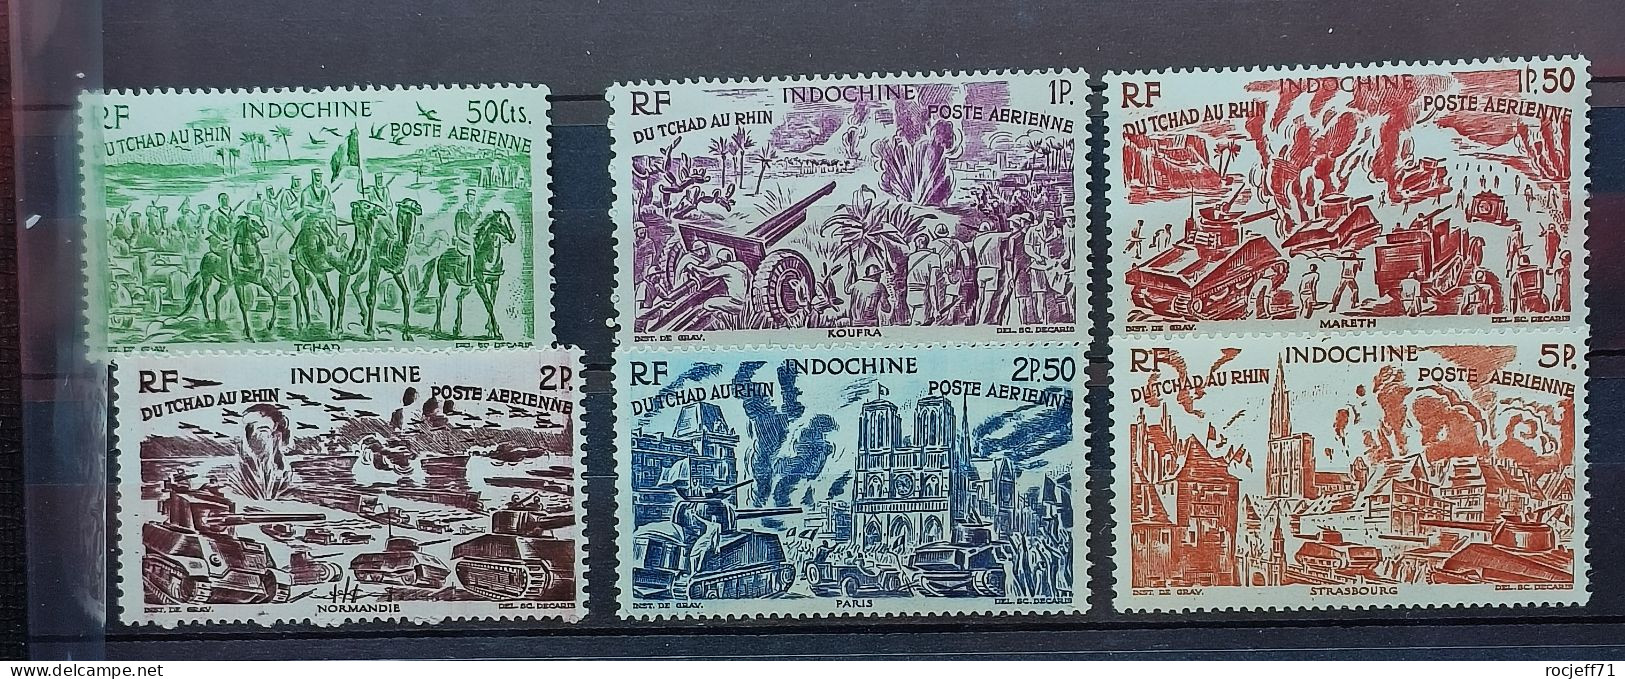 04 - 24 - Indochine - Poste Aérienne N° 40 à 45 - Tchad Au Rhin ** - MNH - Unused Stamps